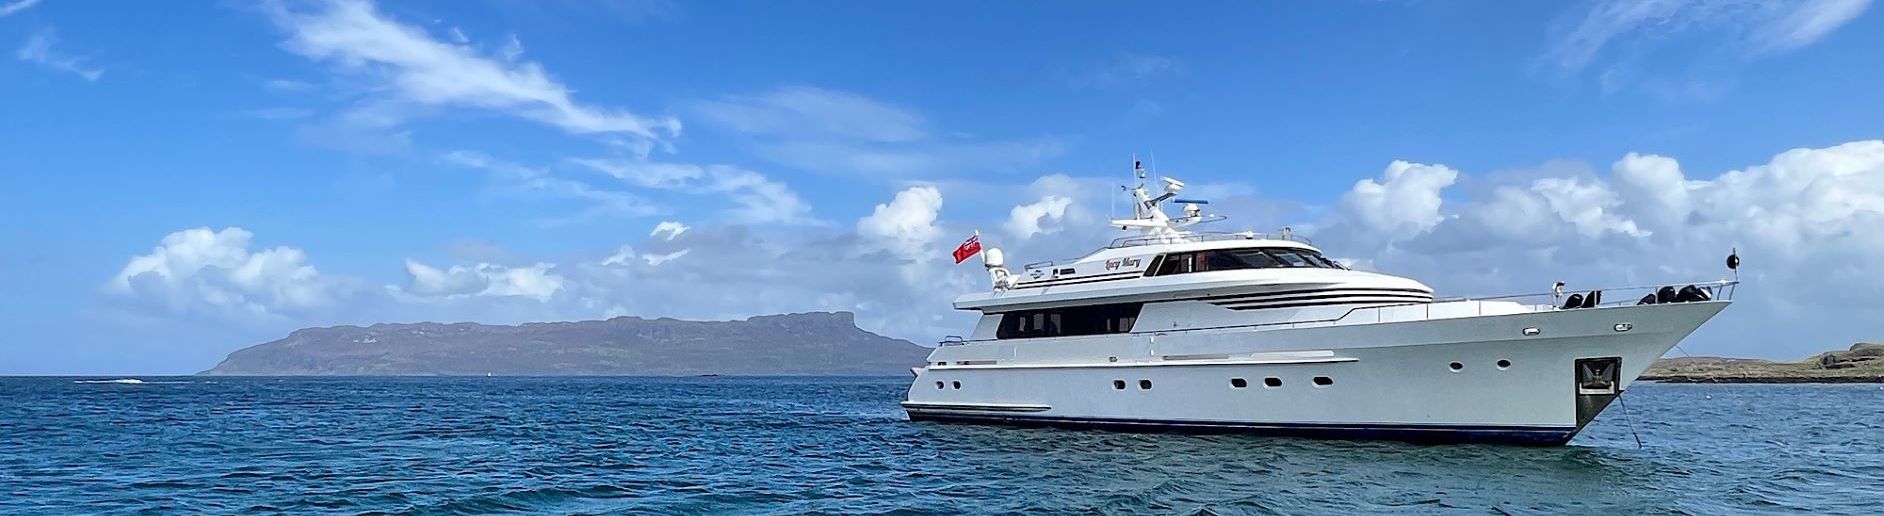 Lucy Mary Luxury Cruise Hebrides